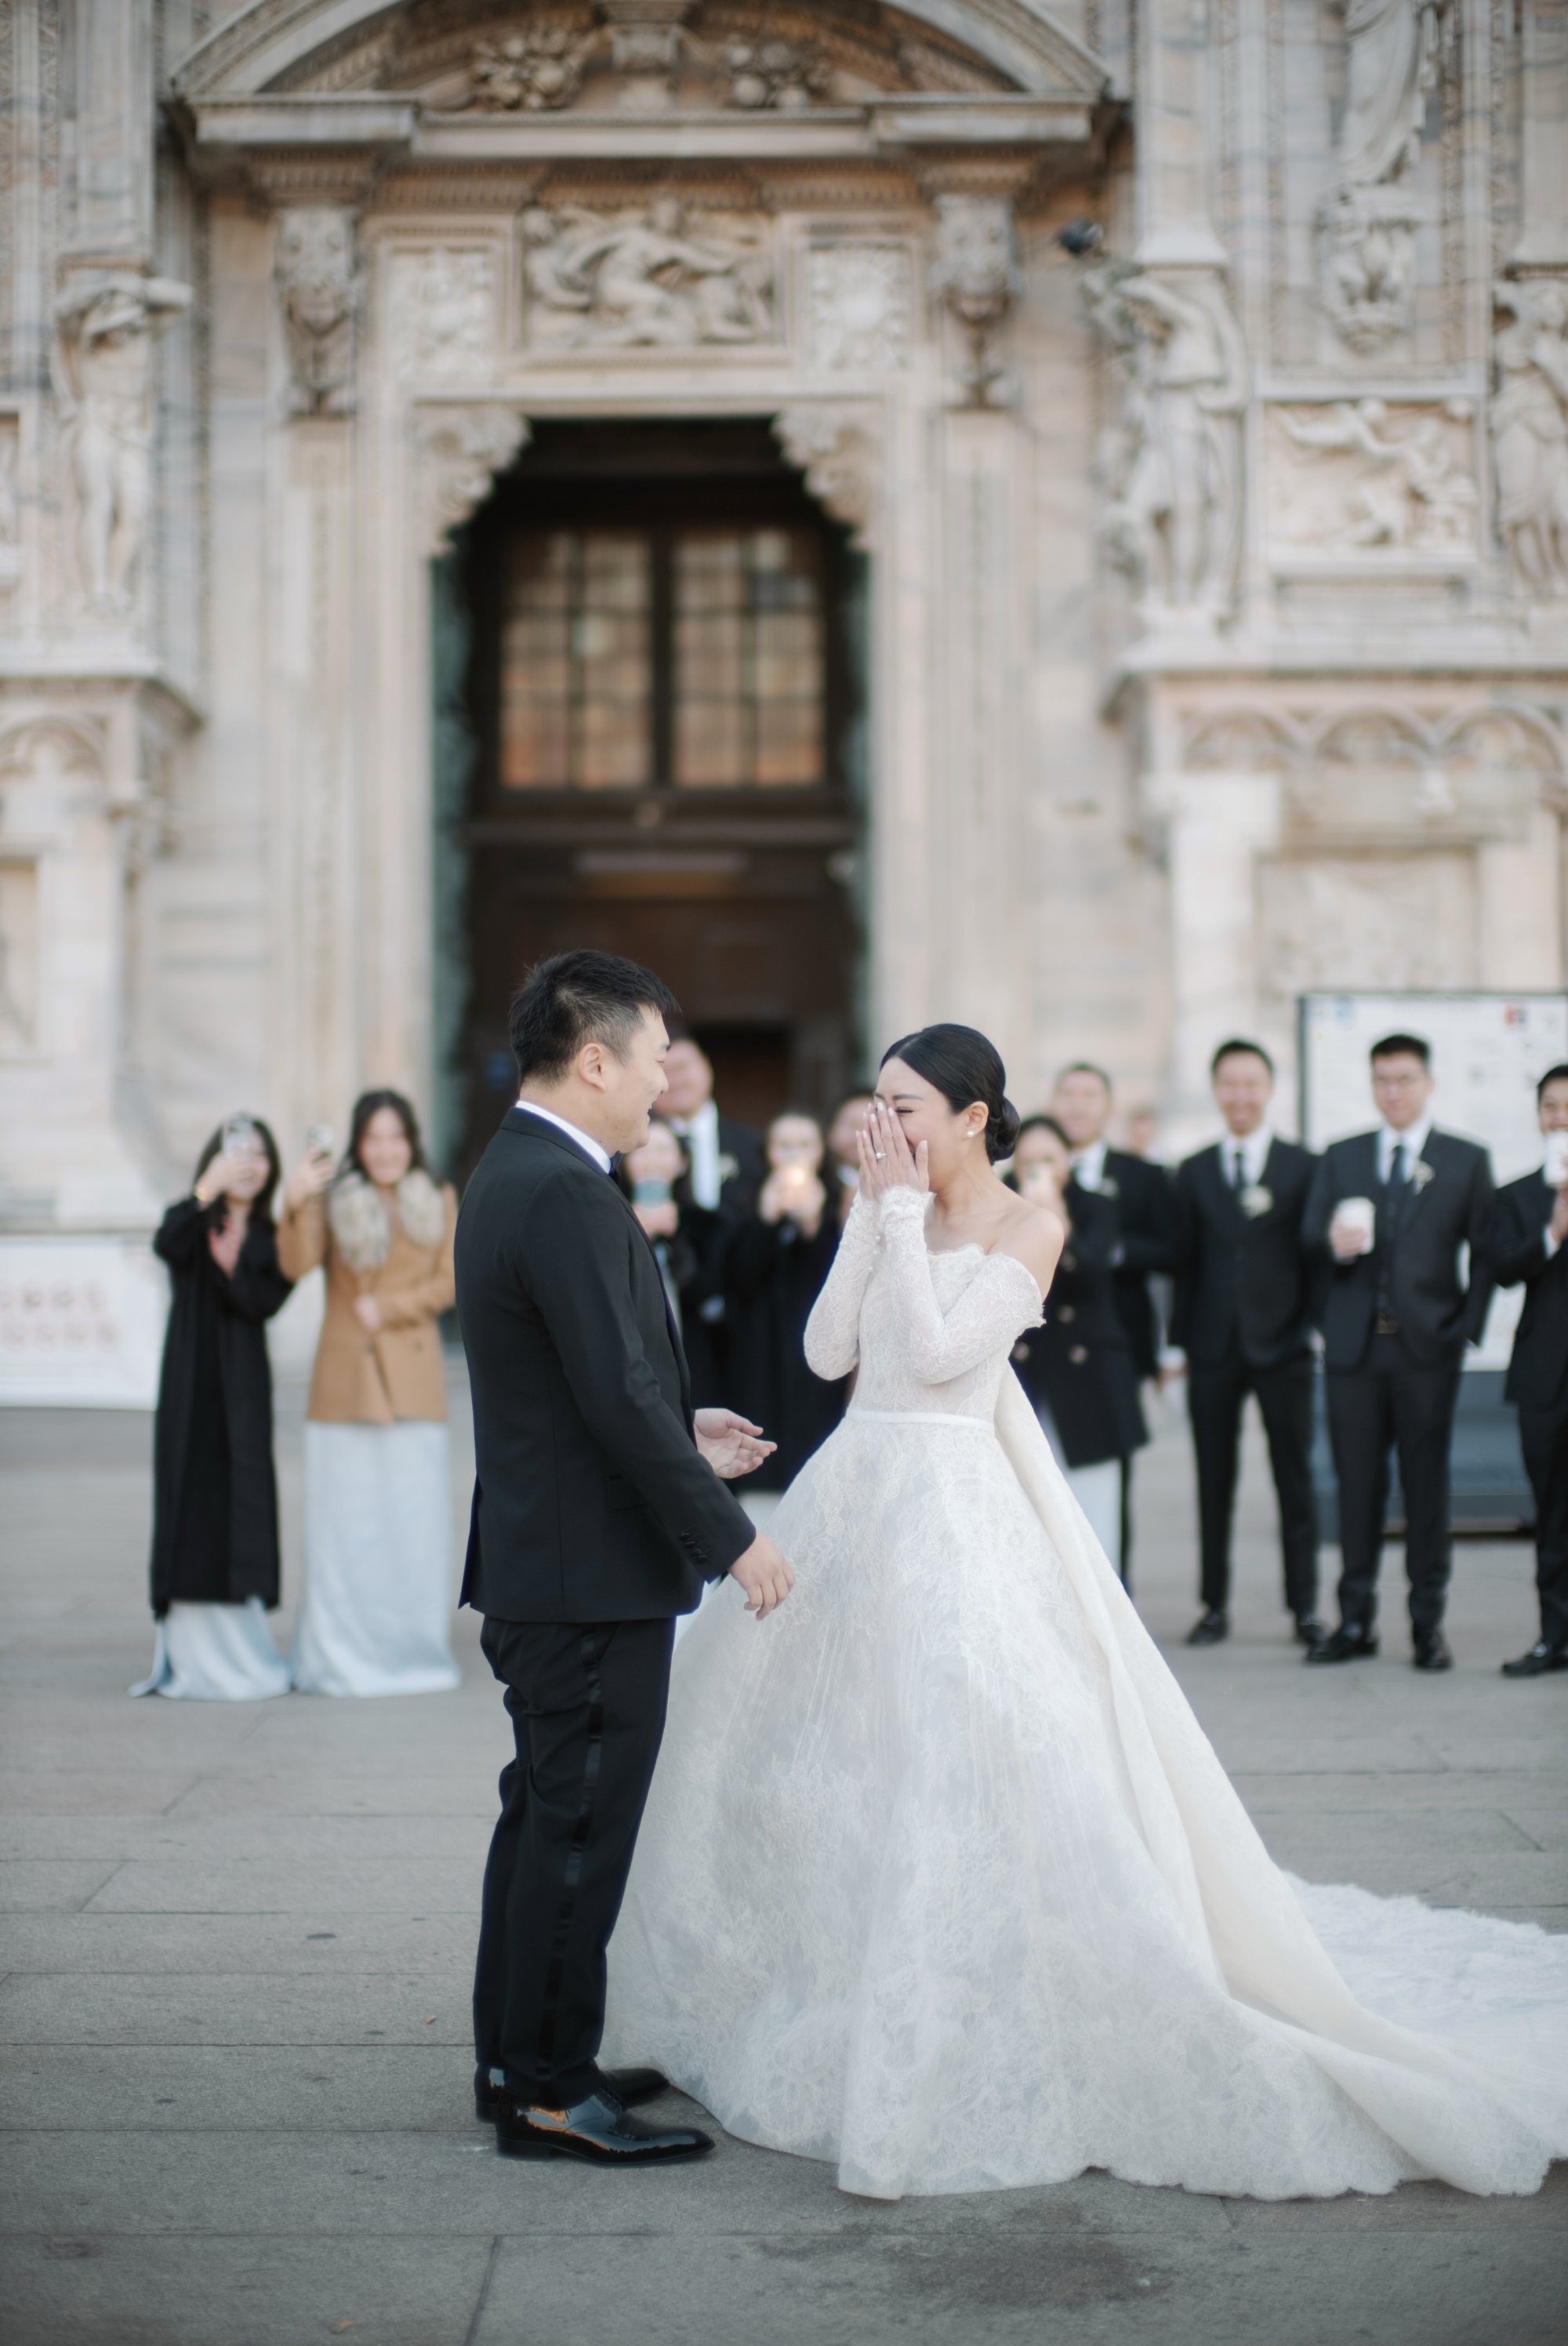 Prawira-Evelyn-Dolomites-Italy-Santre wedding-Yefta Gunawan-Jeriko MUA-Carol Kuntjoro Photography-20.jpg